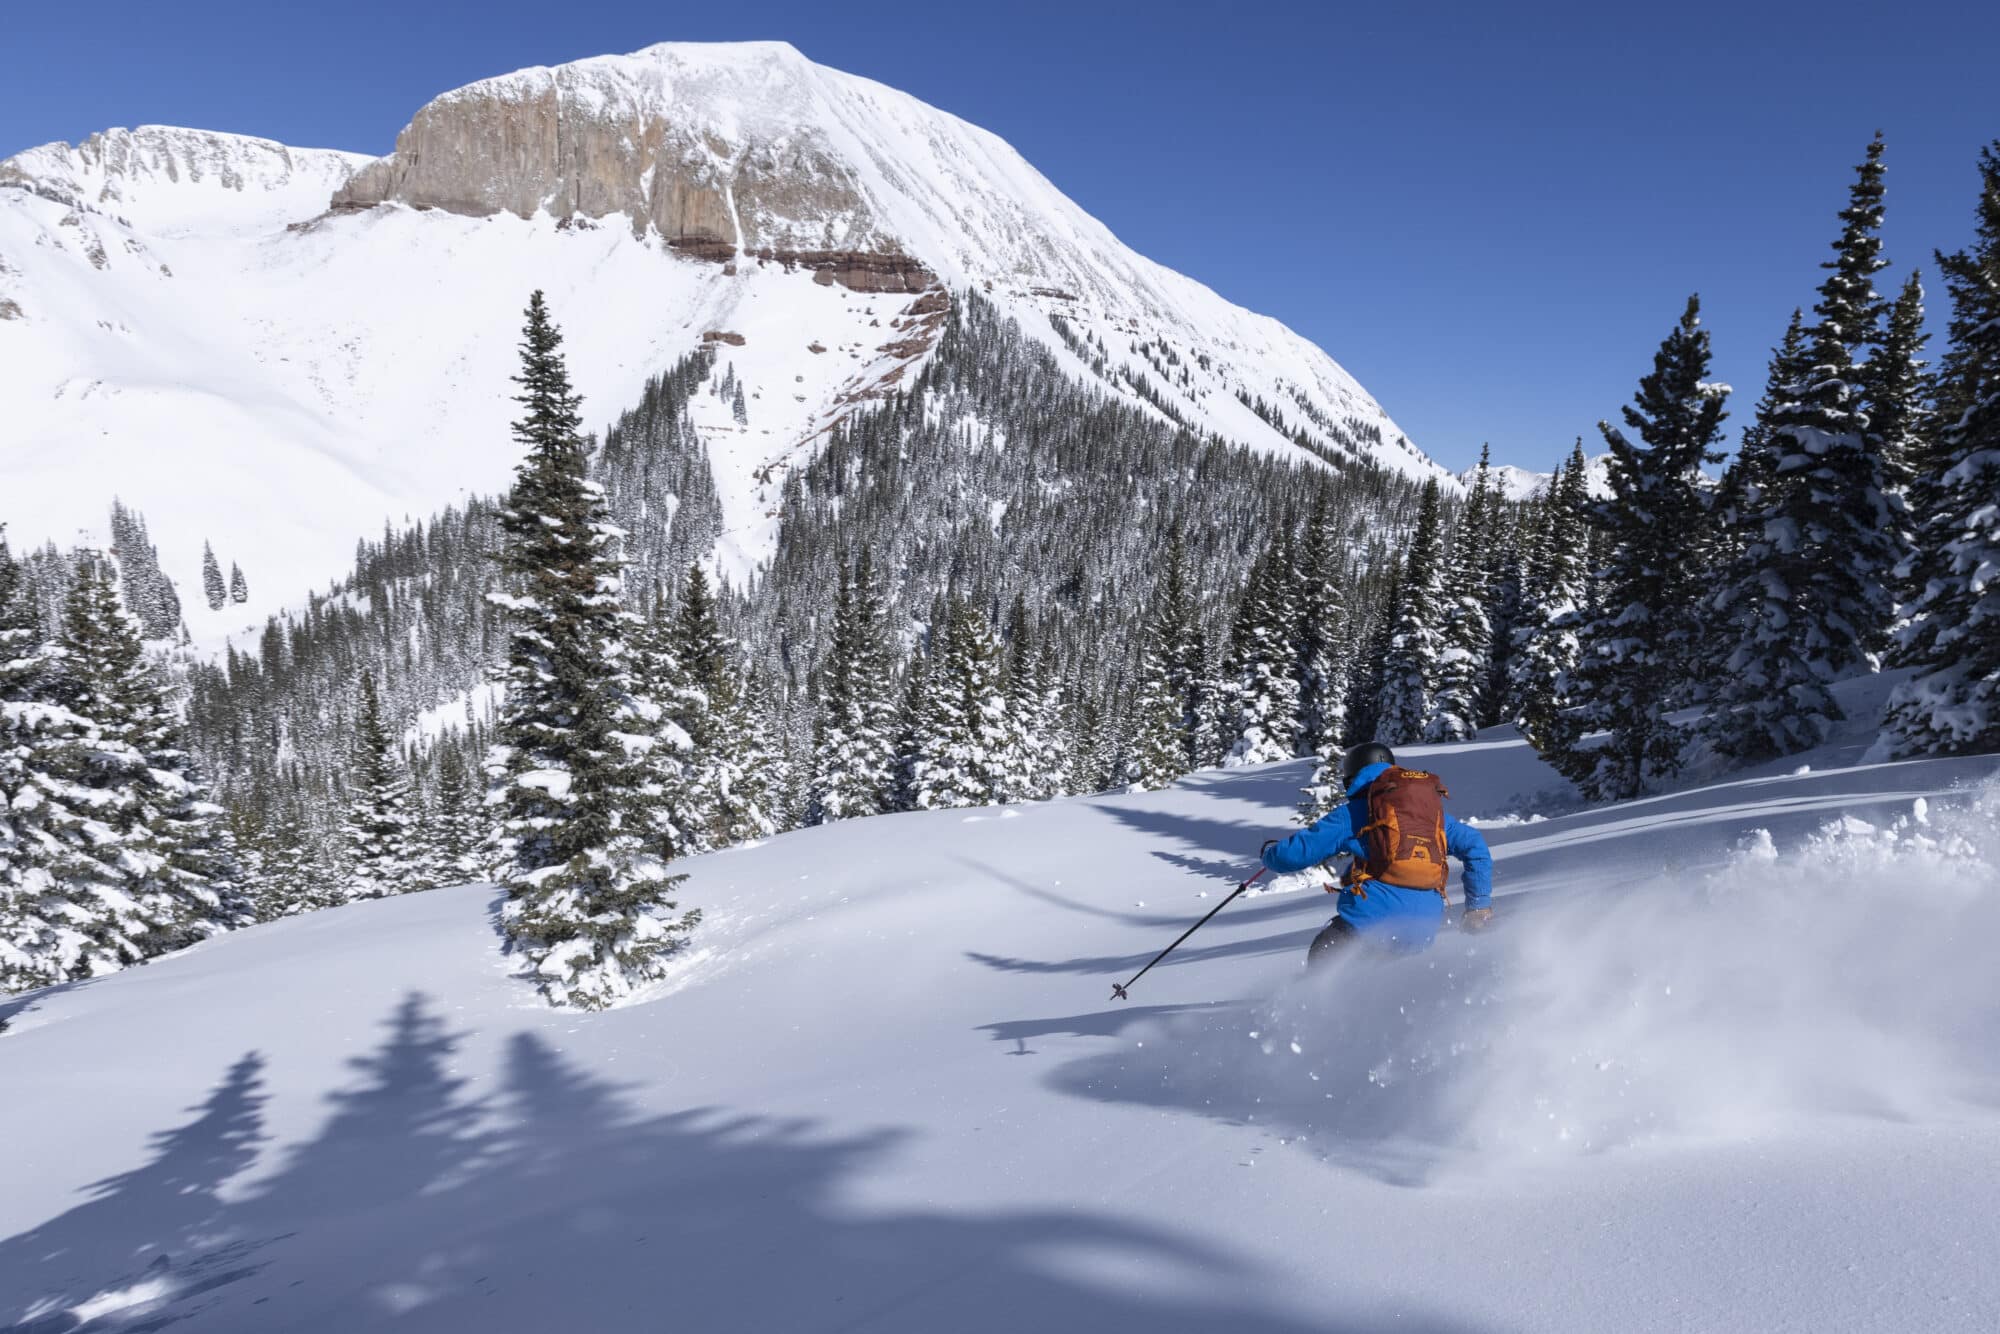 Skier takes first tracks on snowcat skiing trip